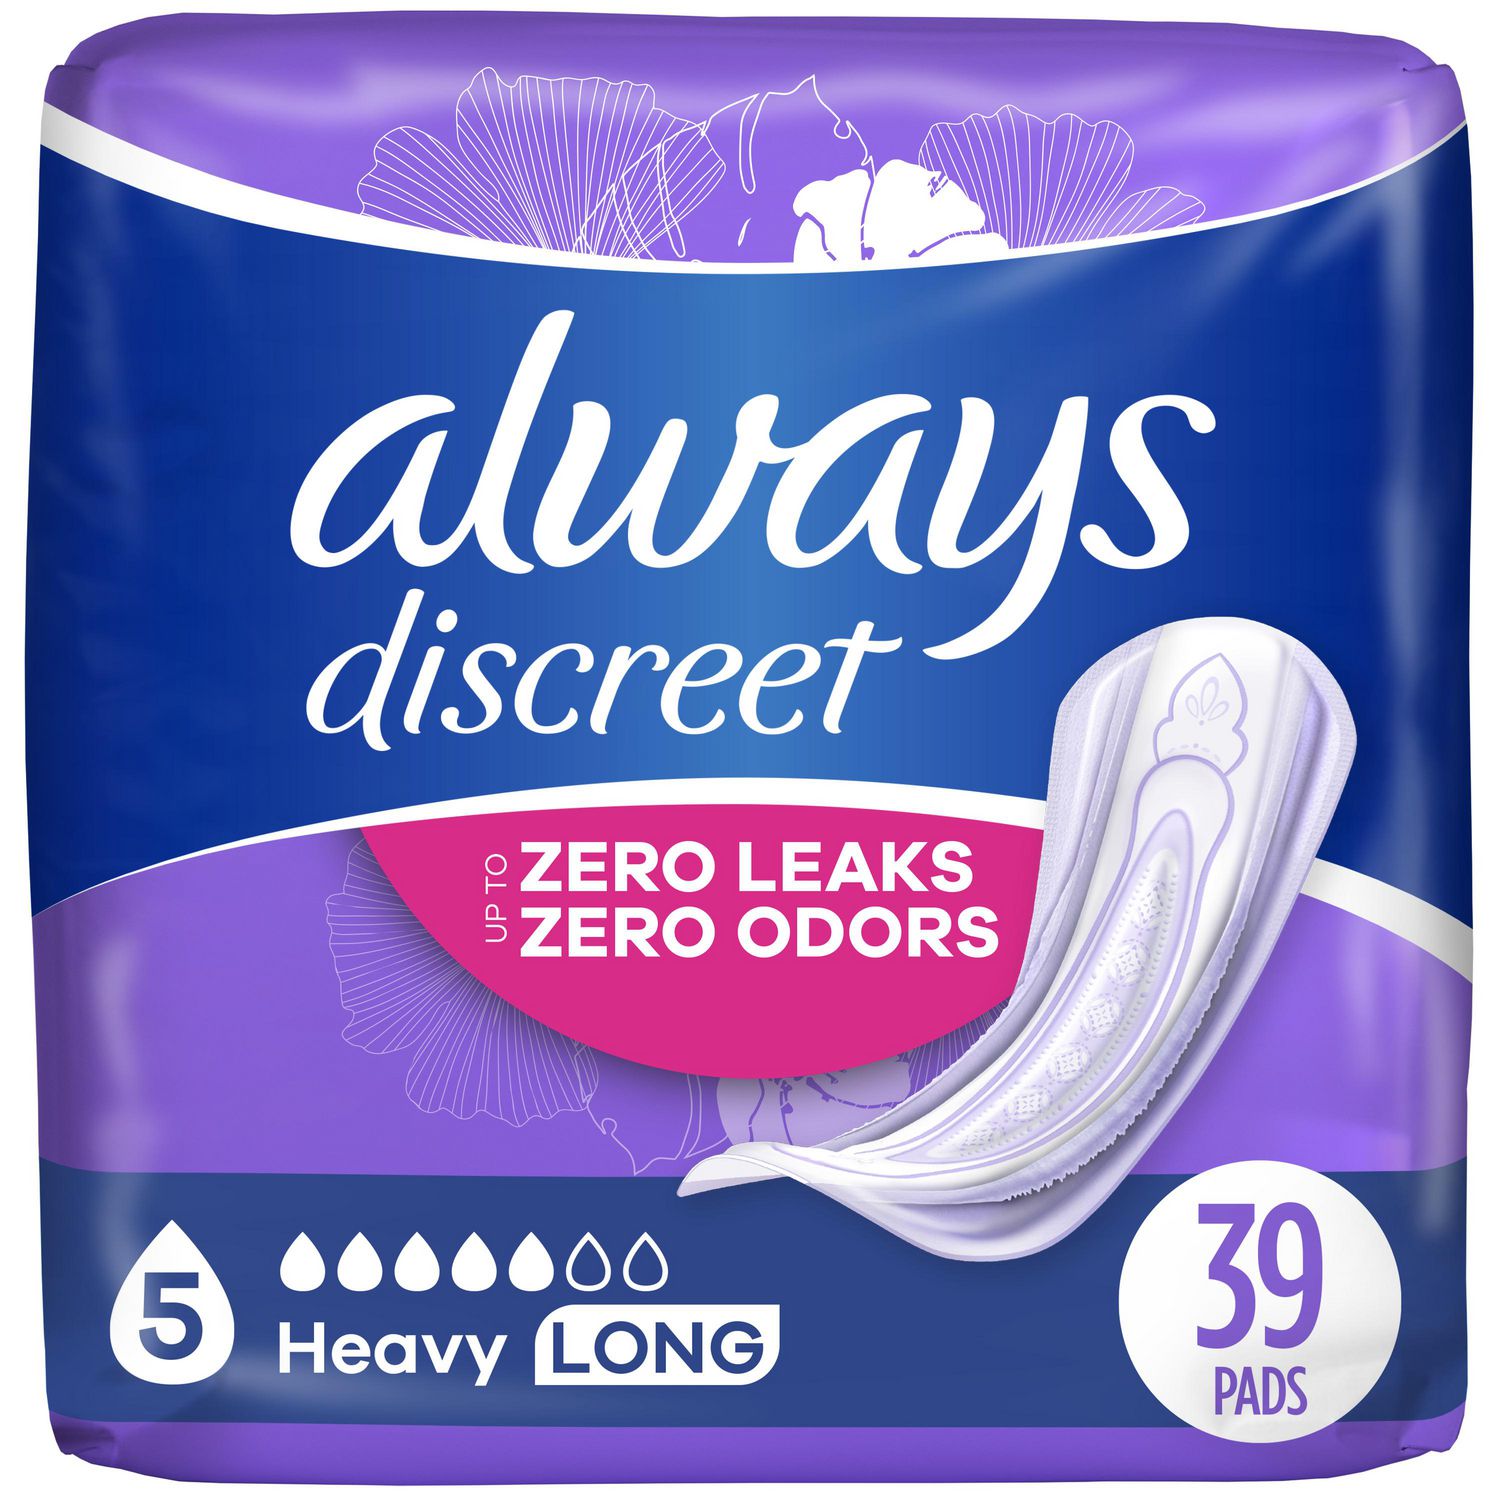 Buy Always Discreet Maxi Night Pads